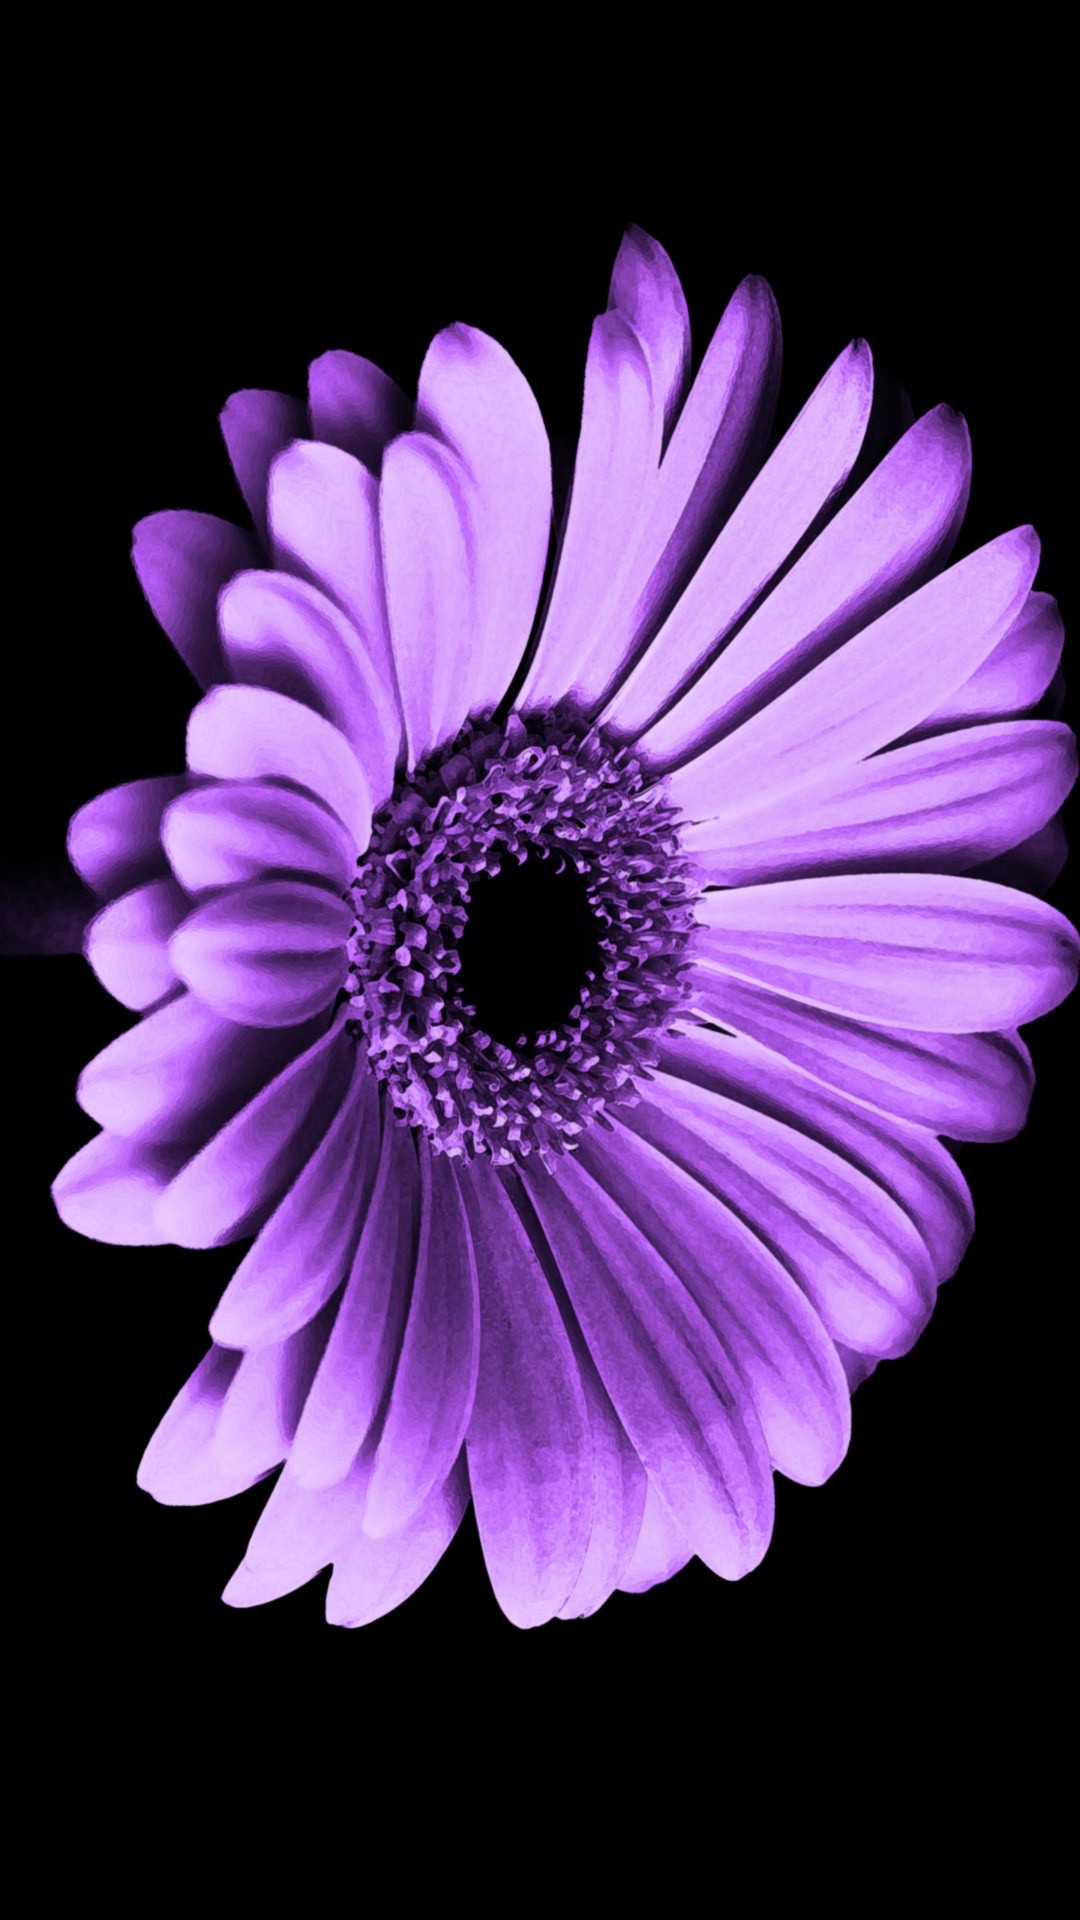 Violet Daisy Flower iPhone Wallpaper resolution 1080x1920